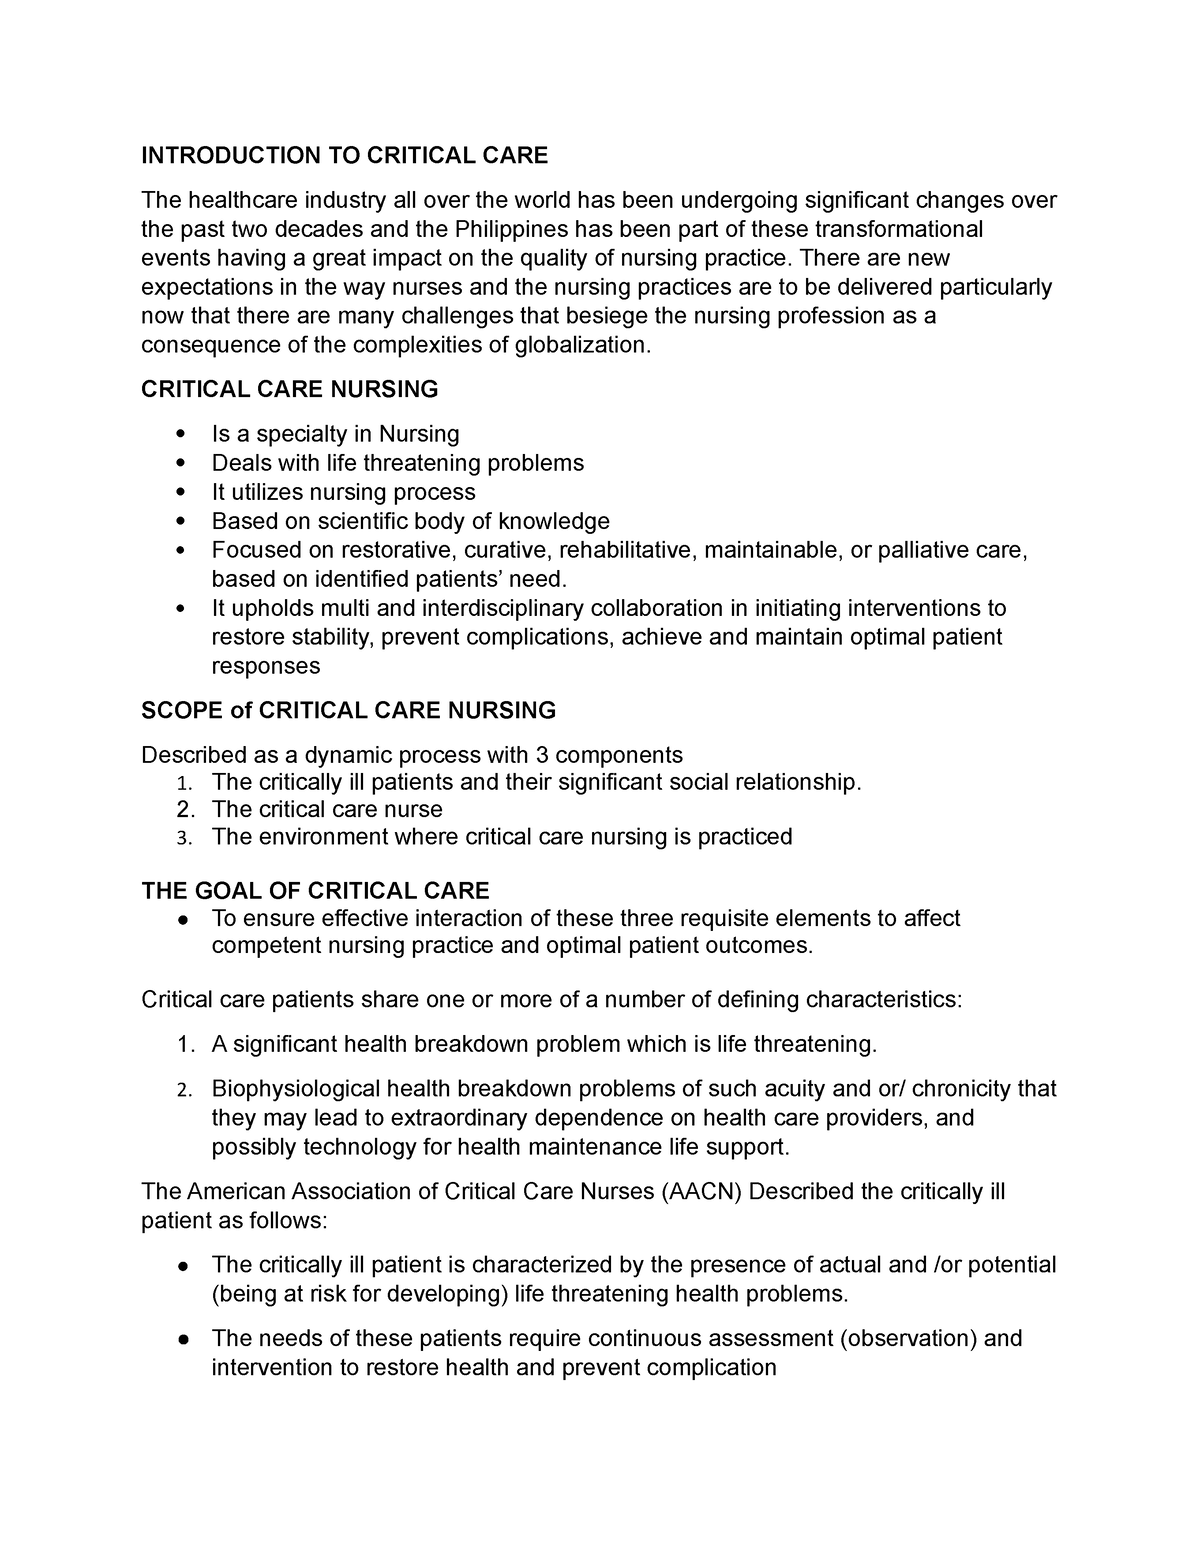 research problem statement in critical care nursing